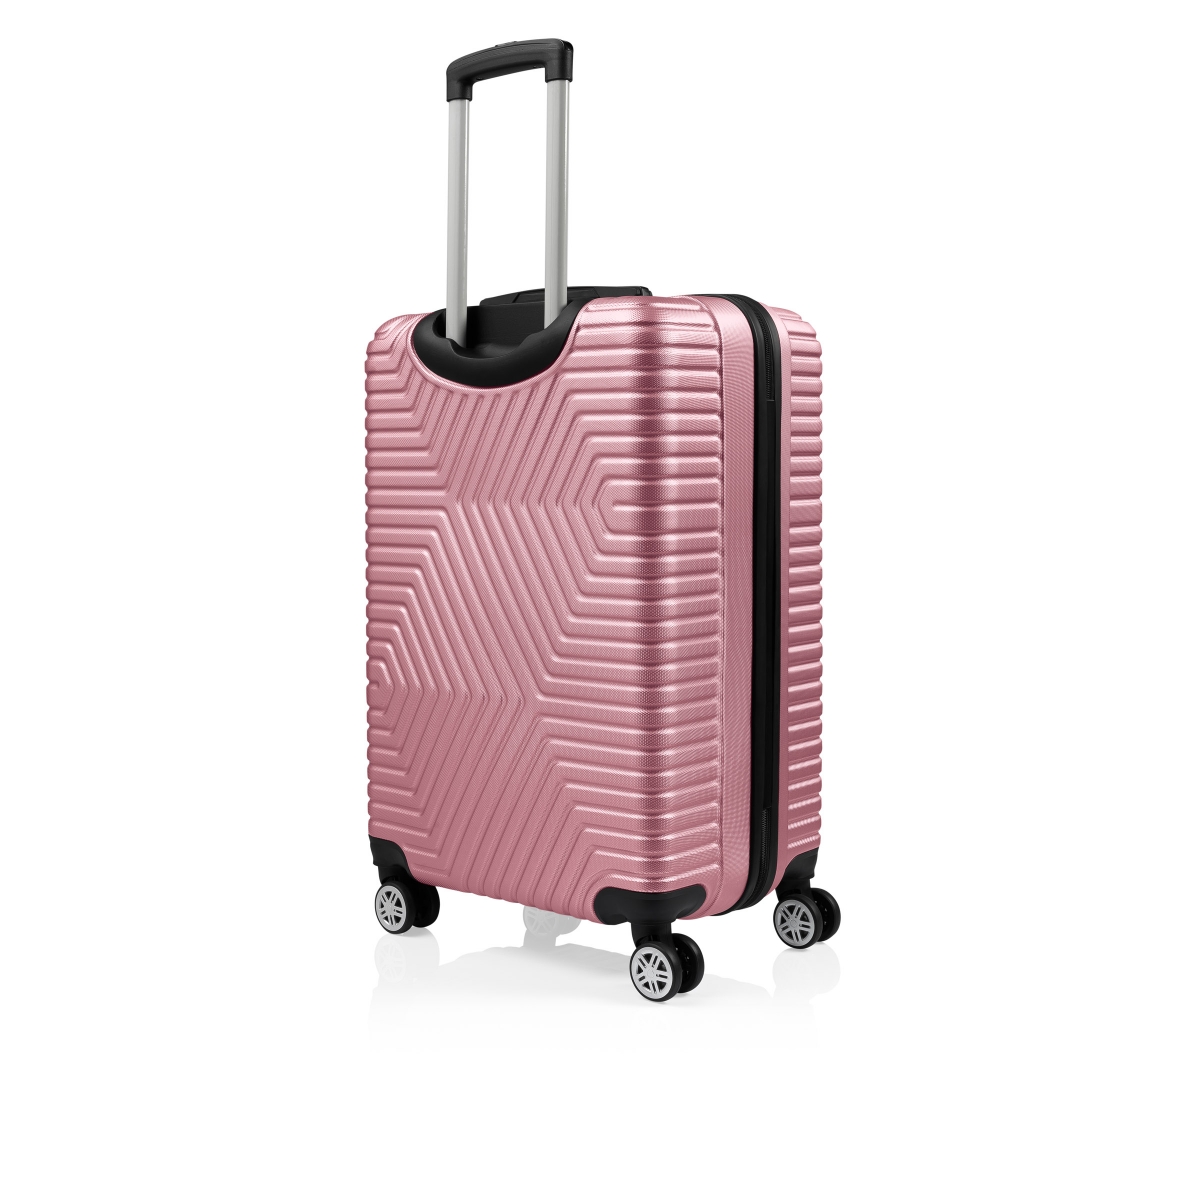 G&D Polo Suitcase ABS 3'lü Lüx Valiz Seyahat Seti - Model:600.08 Gül Kurusu